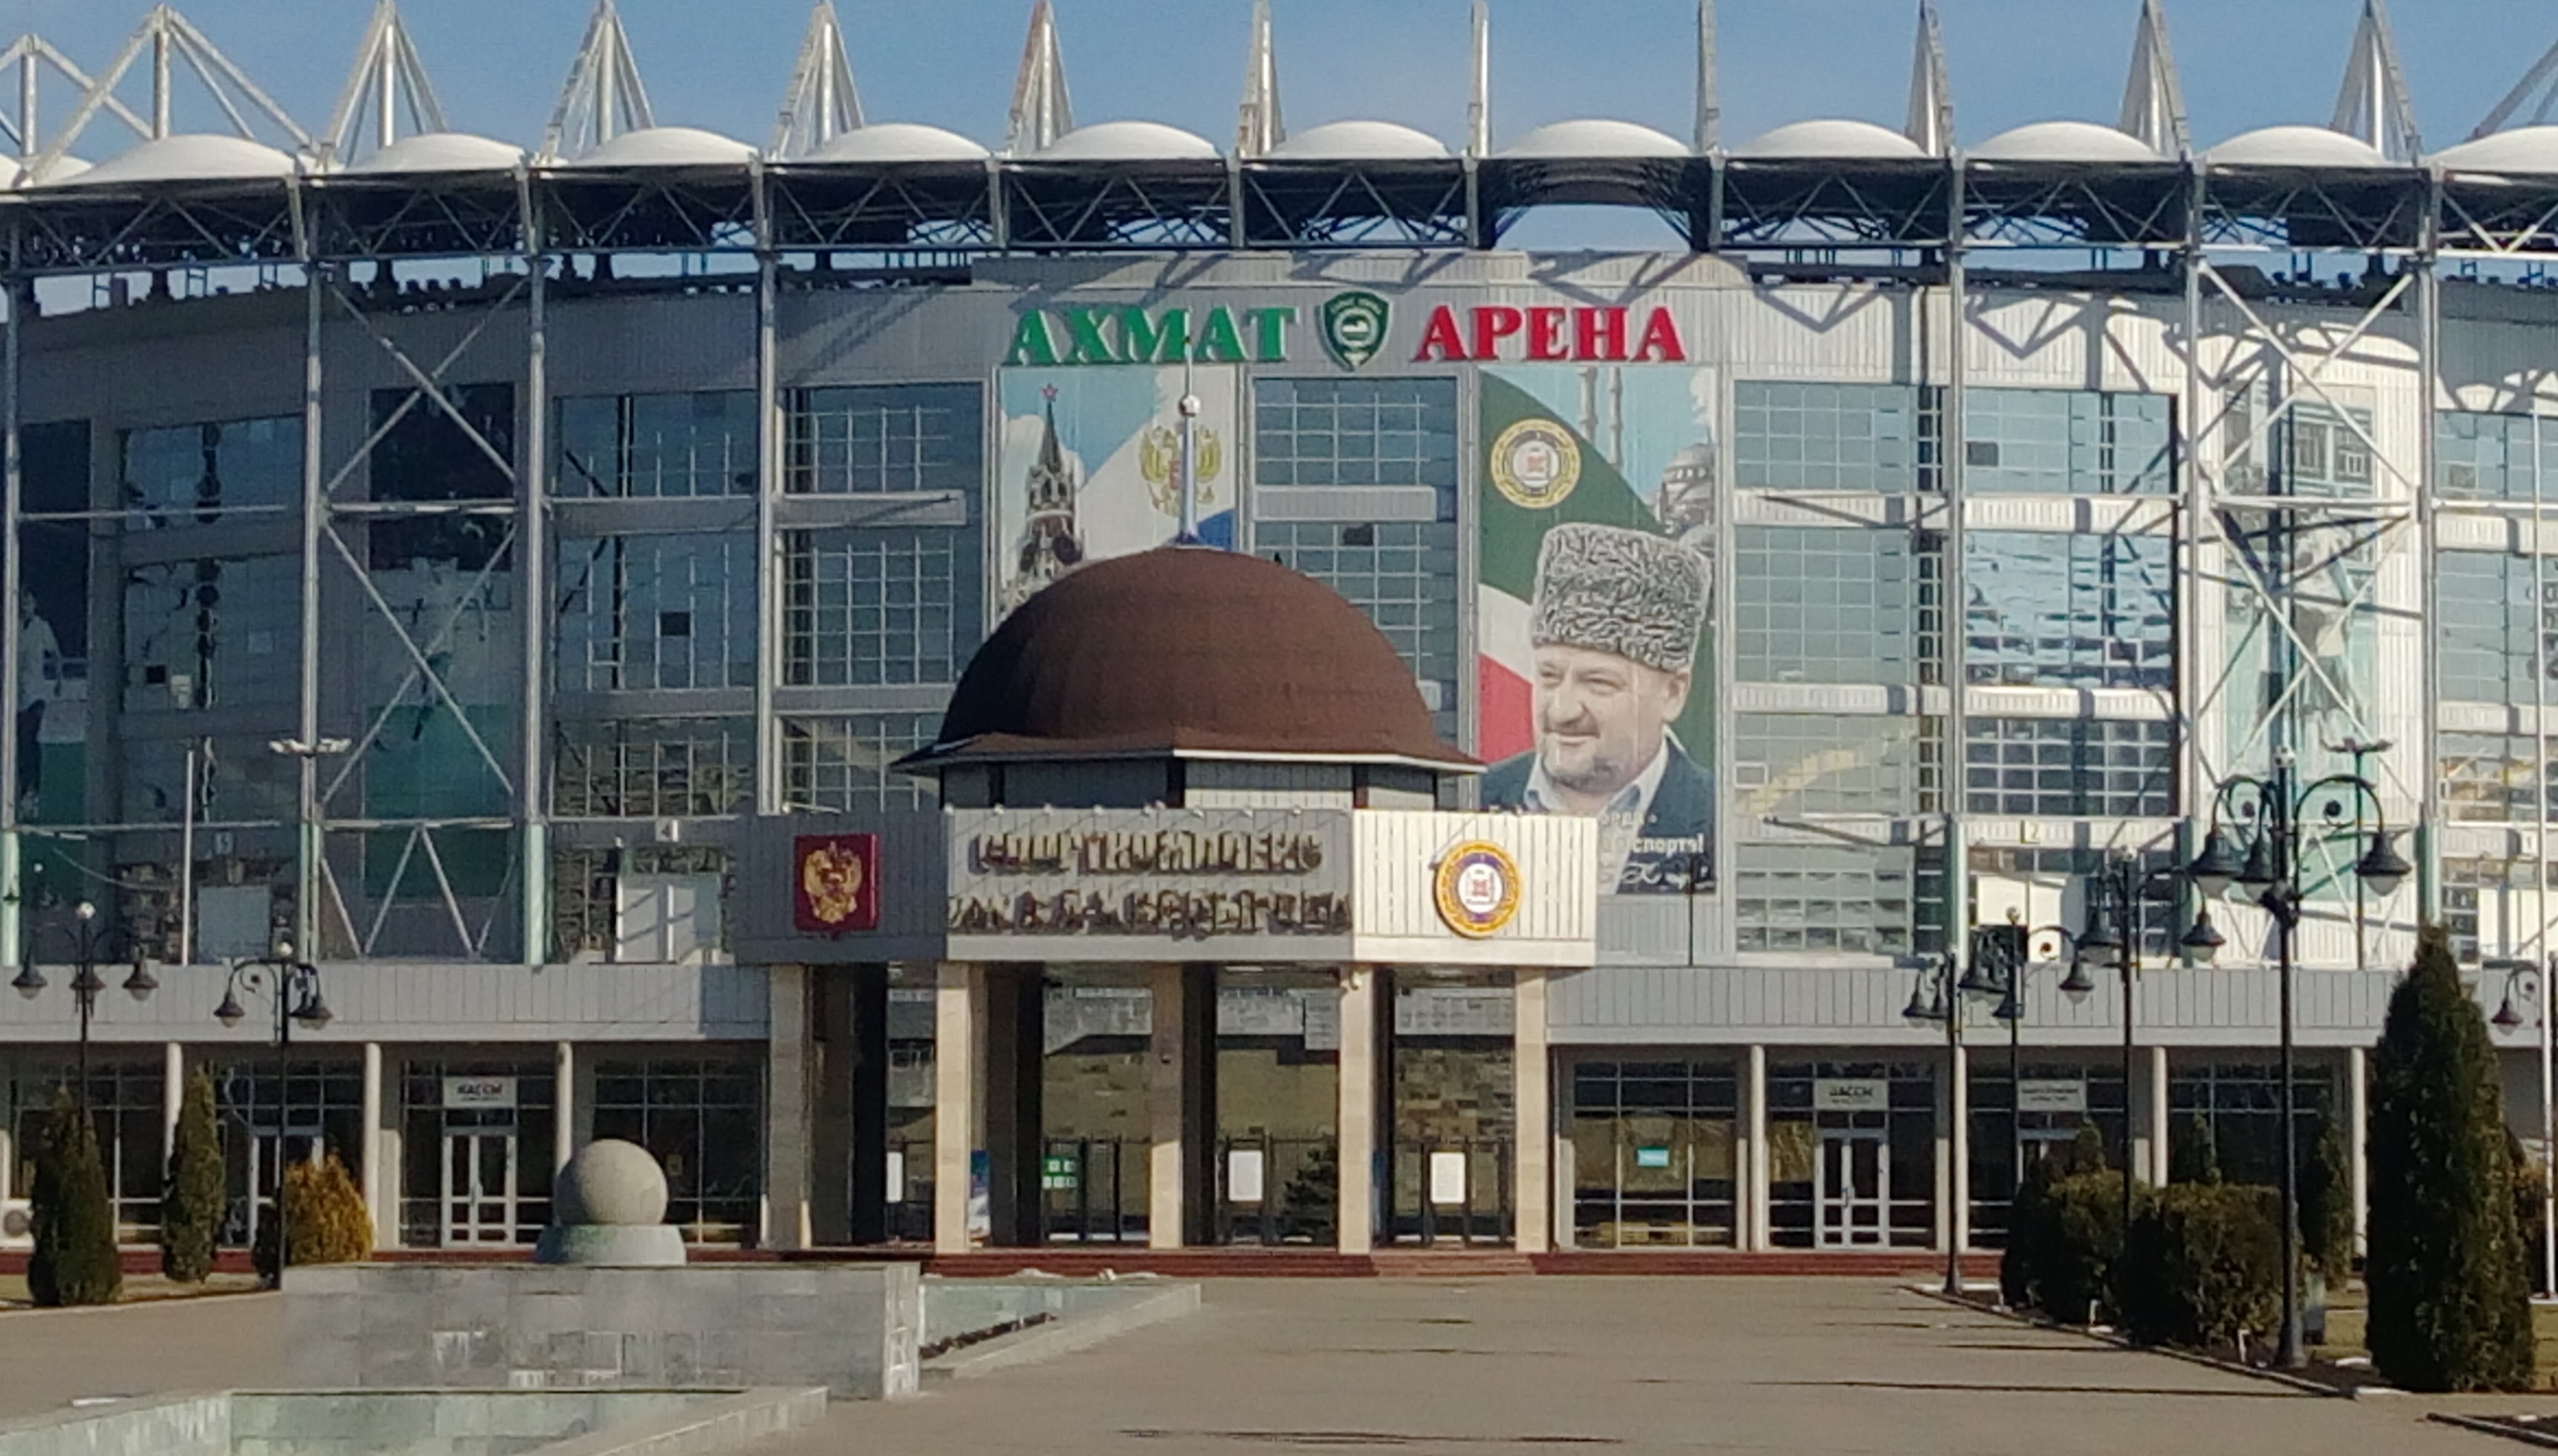 Visit Chechnya